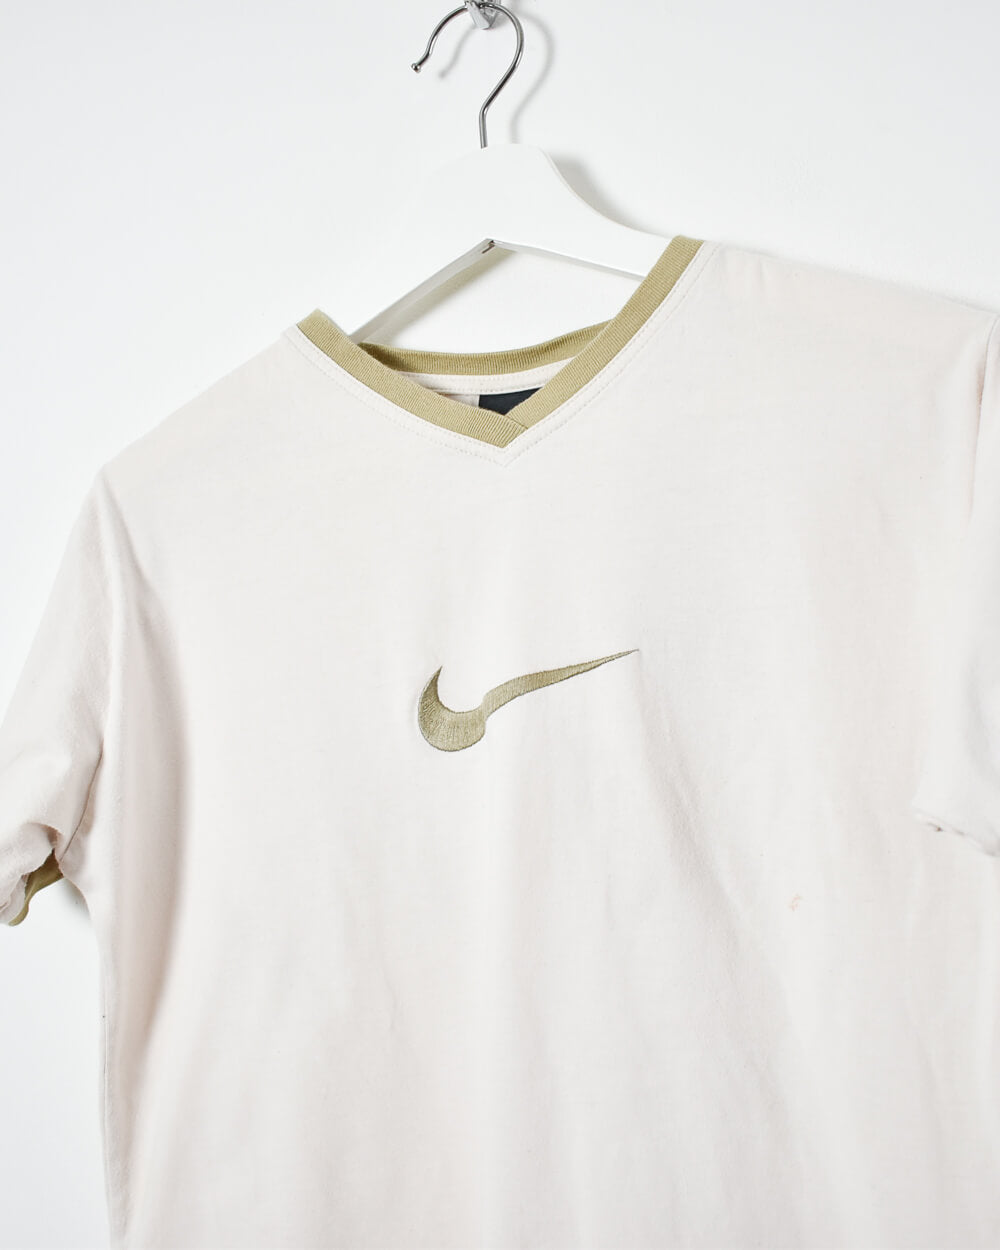 Neutral Nike Women's T-Shirt - Large 